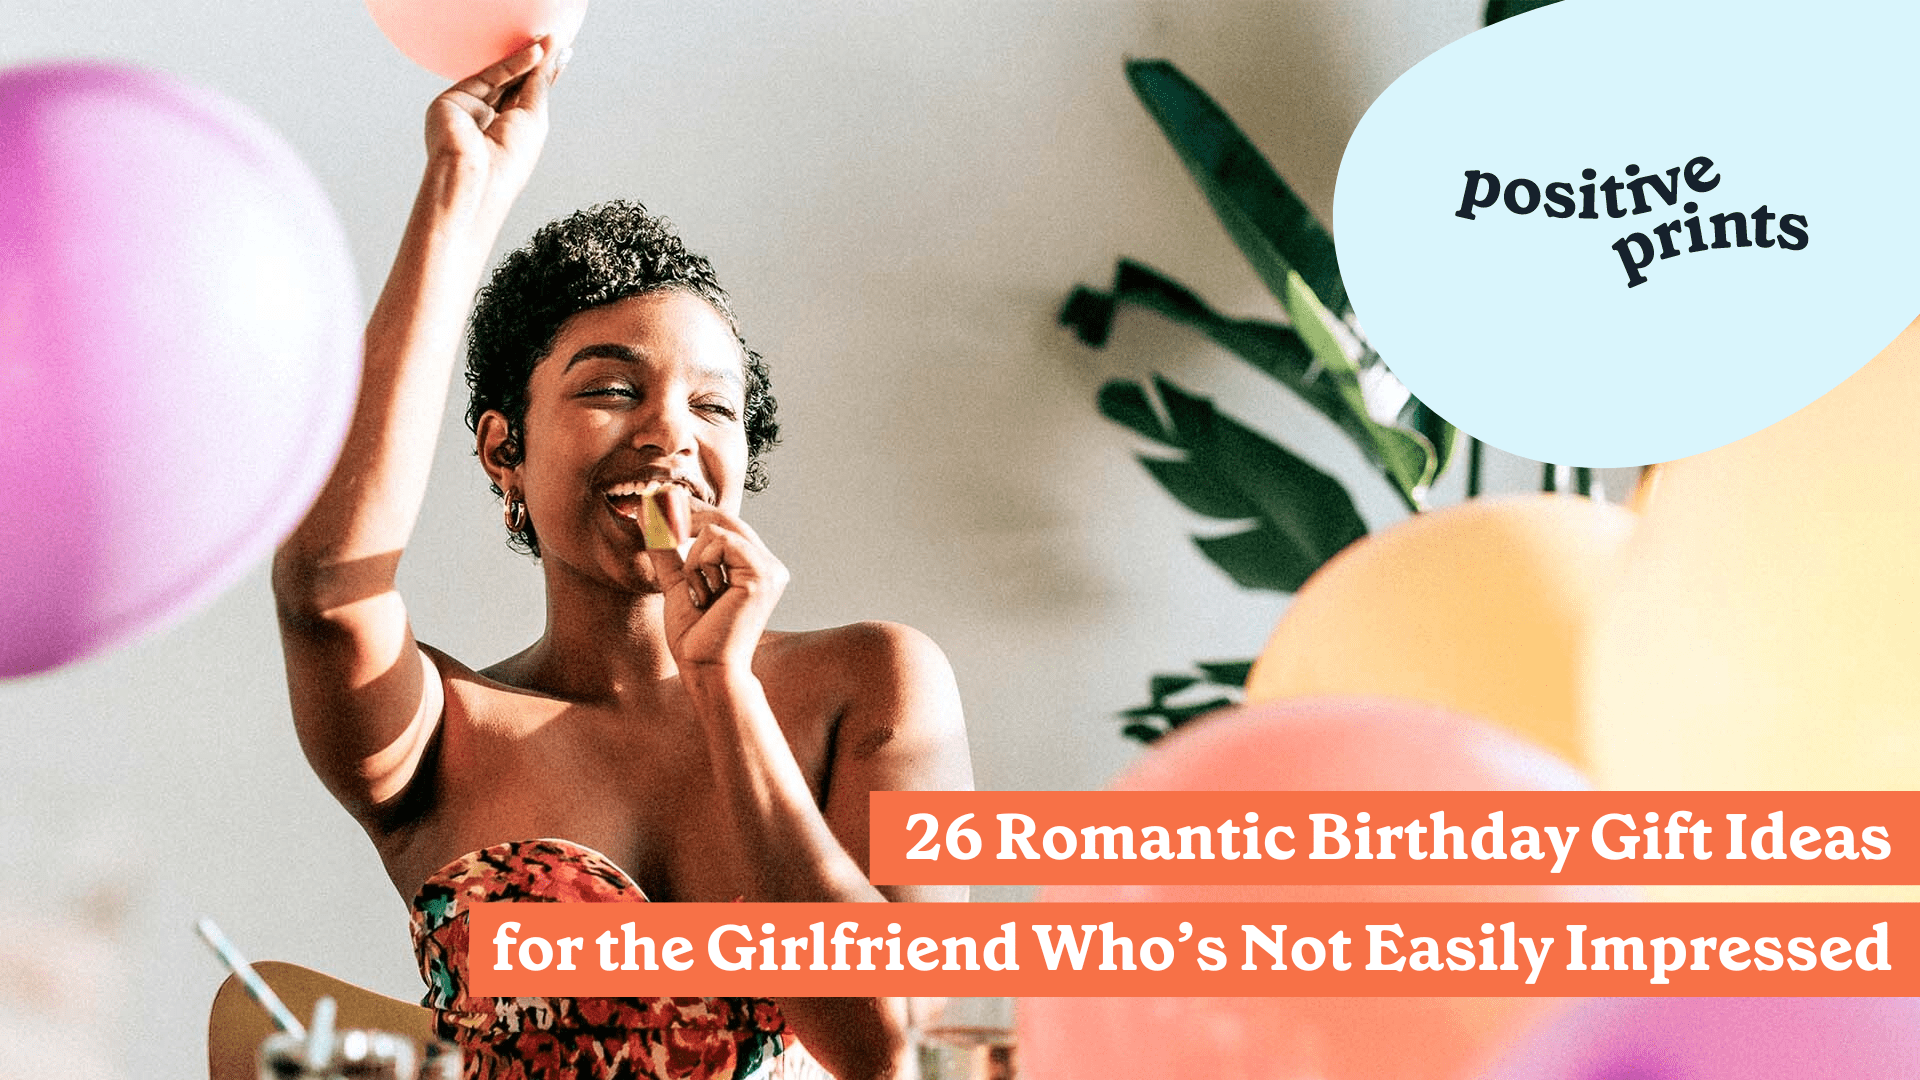 Romantic birthday gift ideas for girlfriend